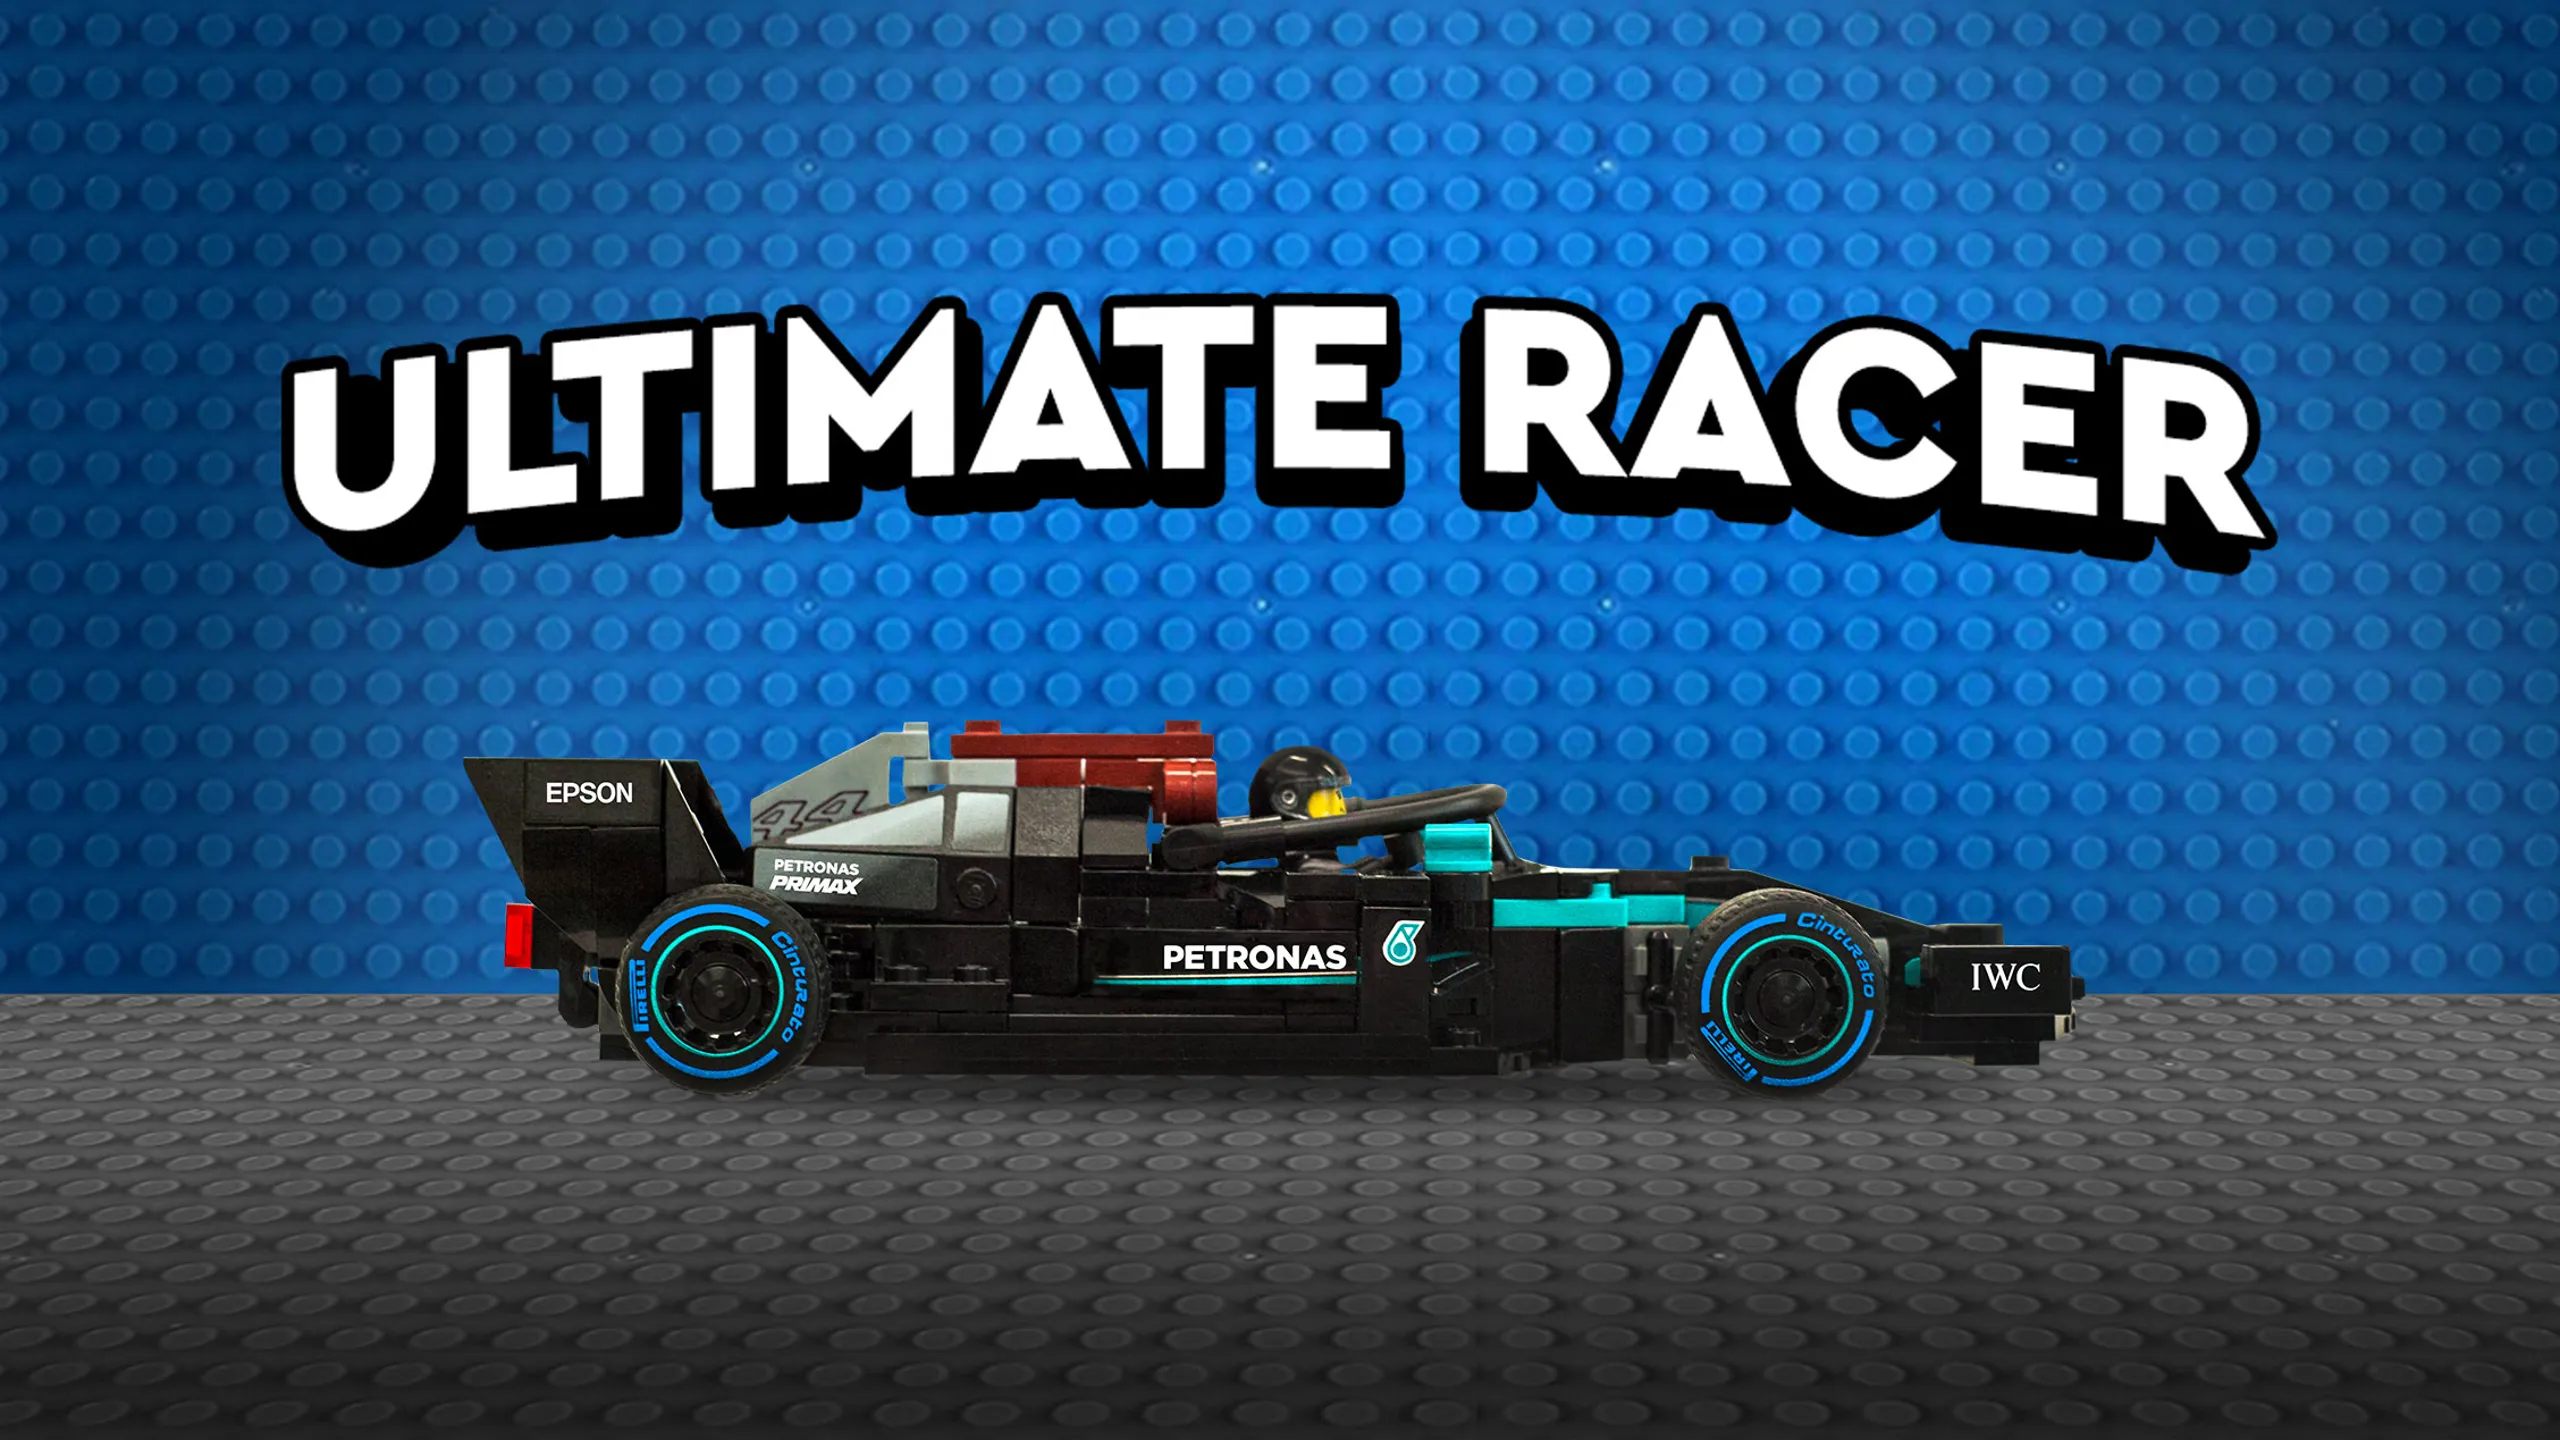 Ultimate Racer